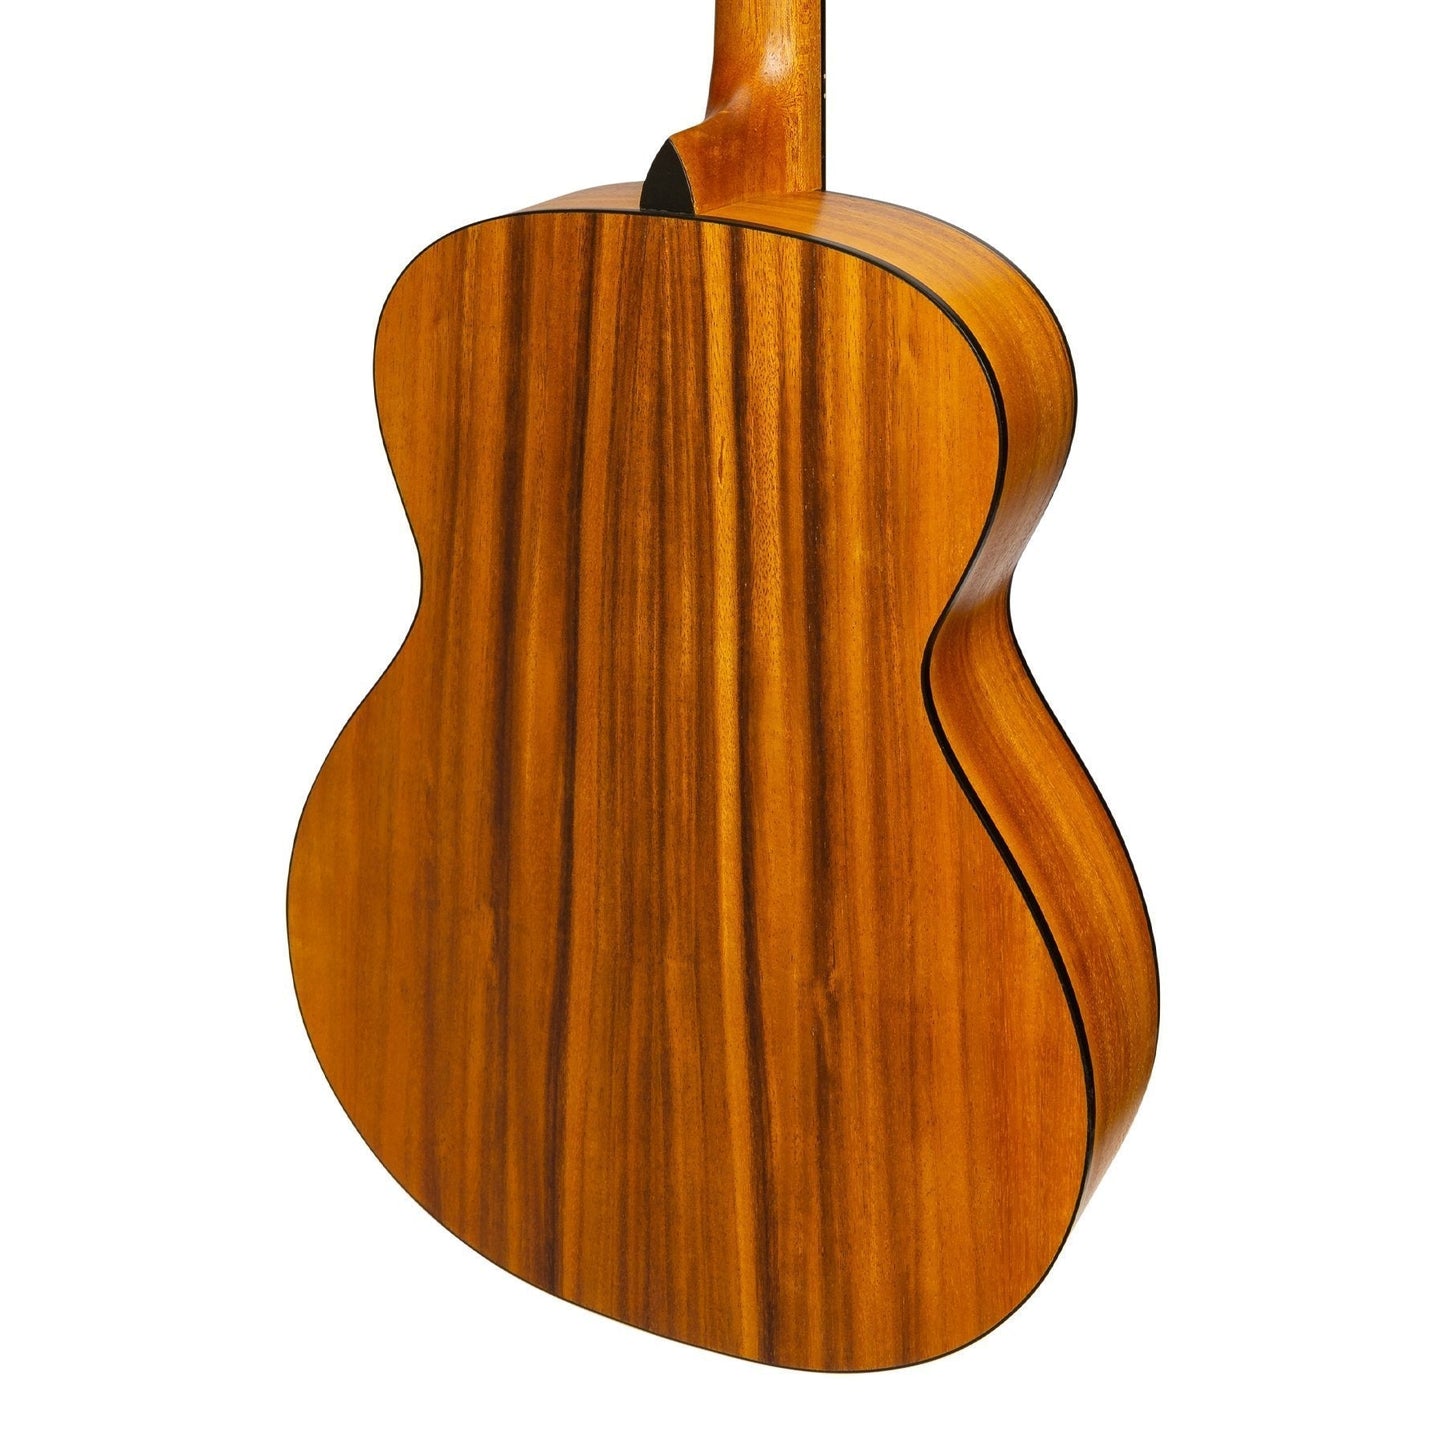 Martinez '41 Series' Folk Size Acoustic Guitar with Built-in Tuner (Koa)